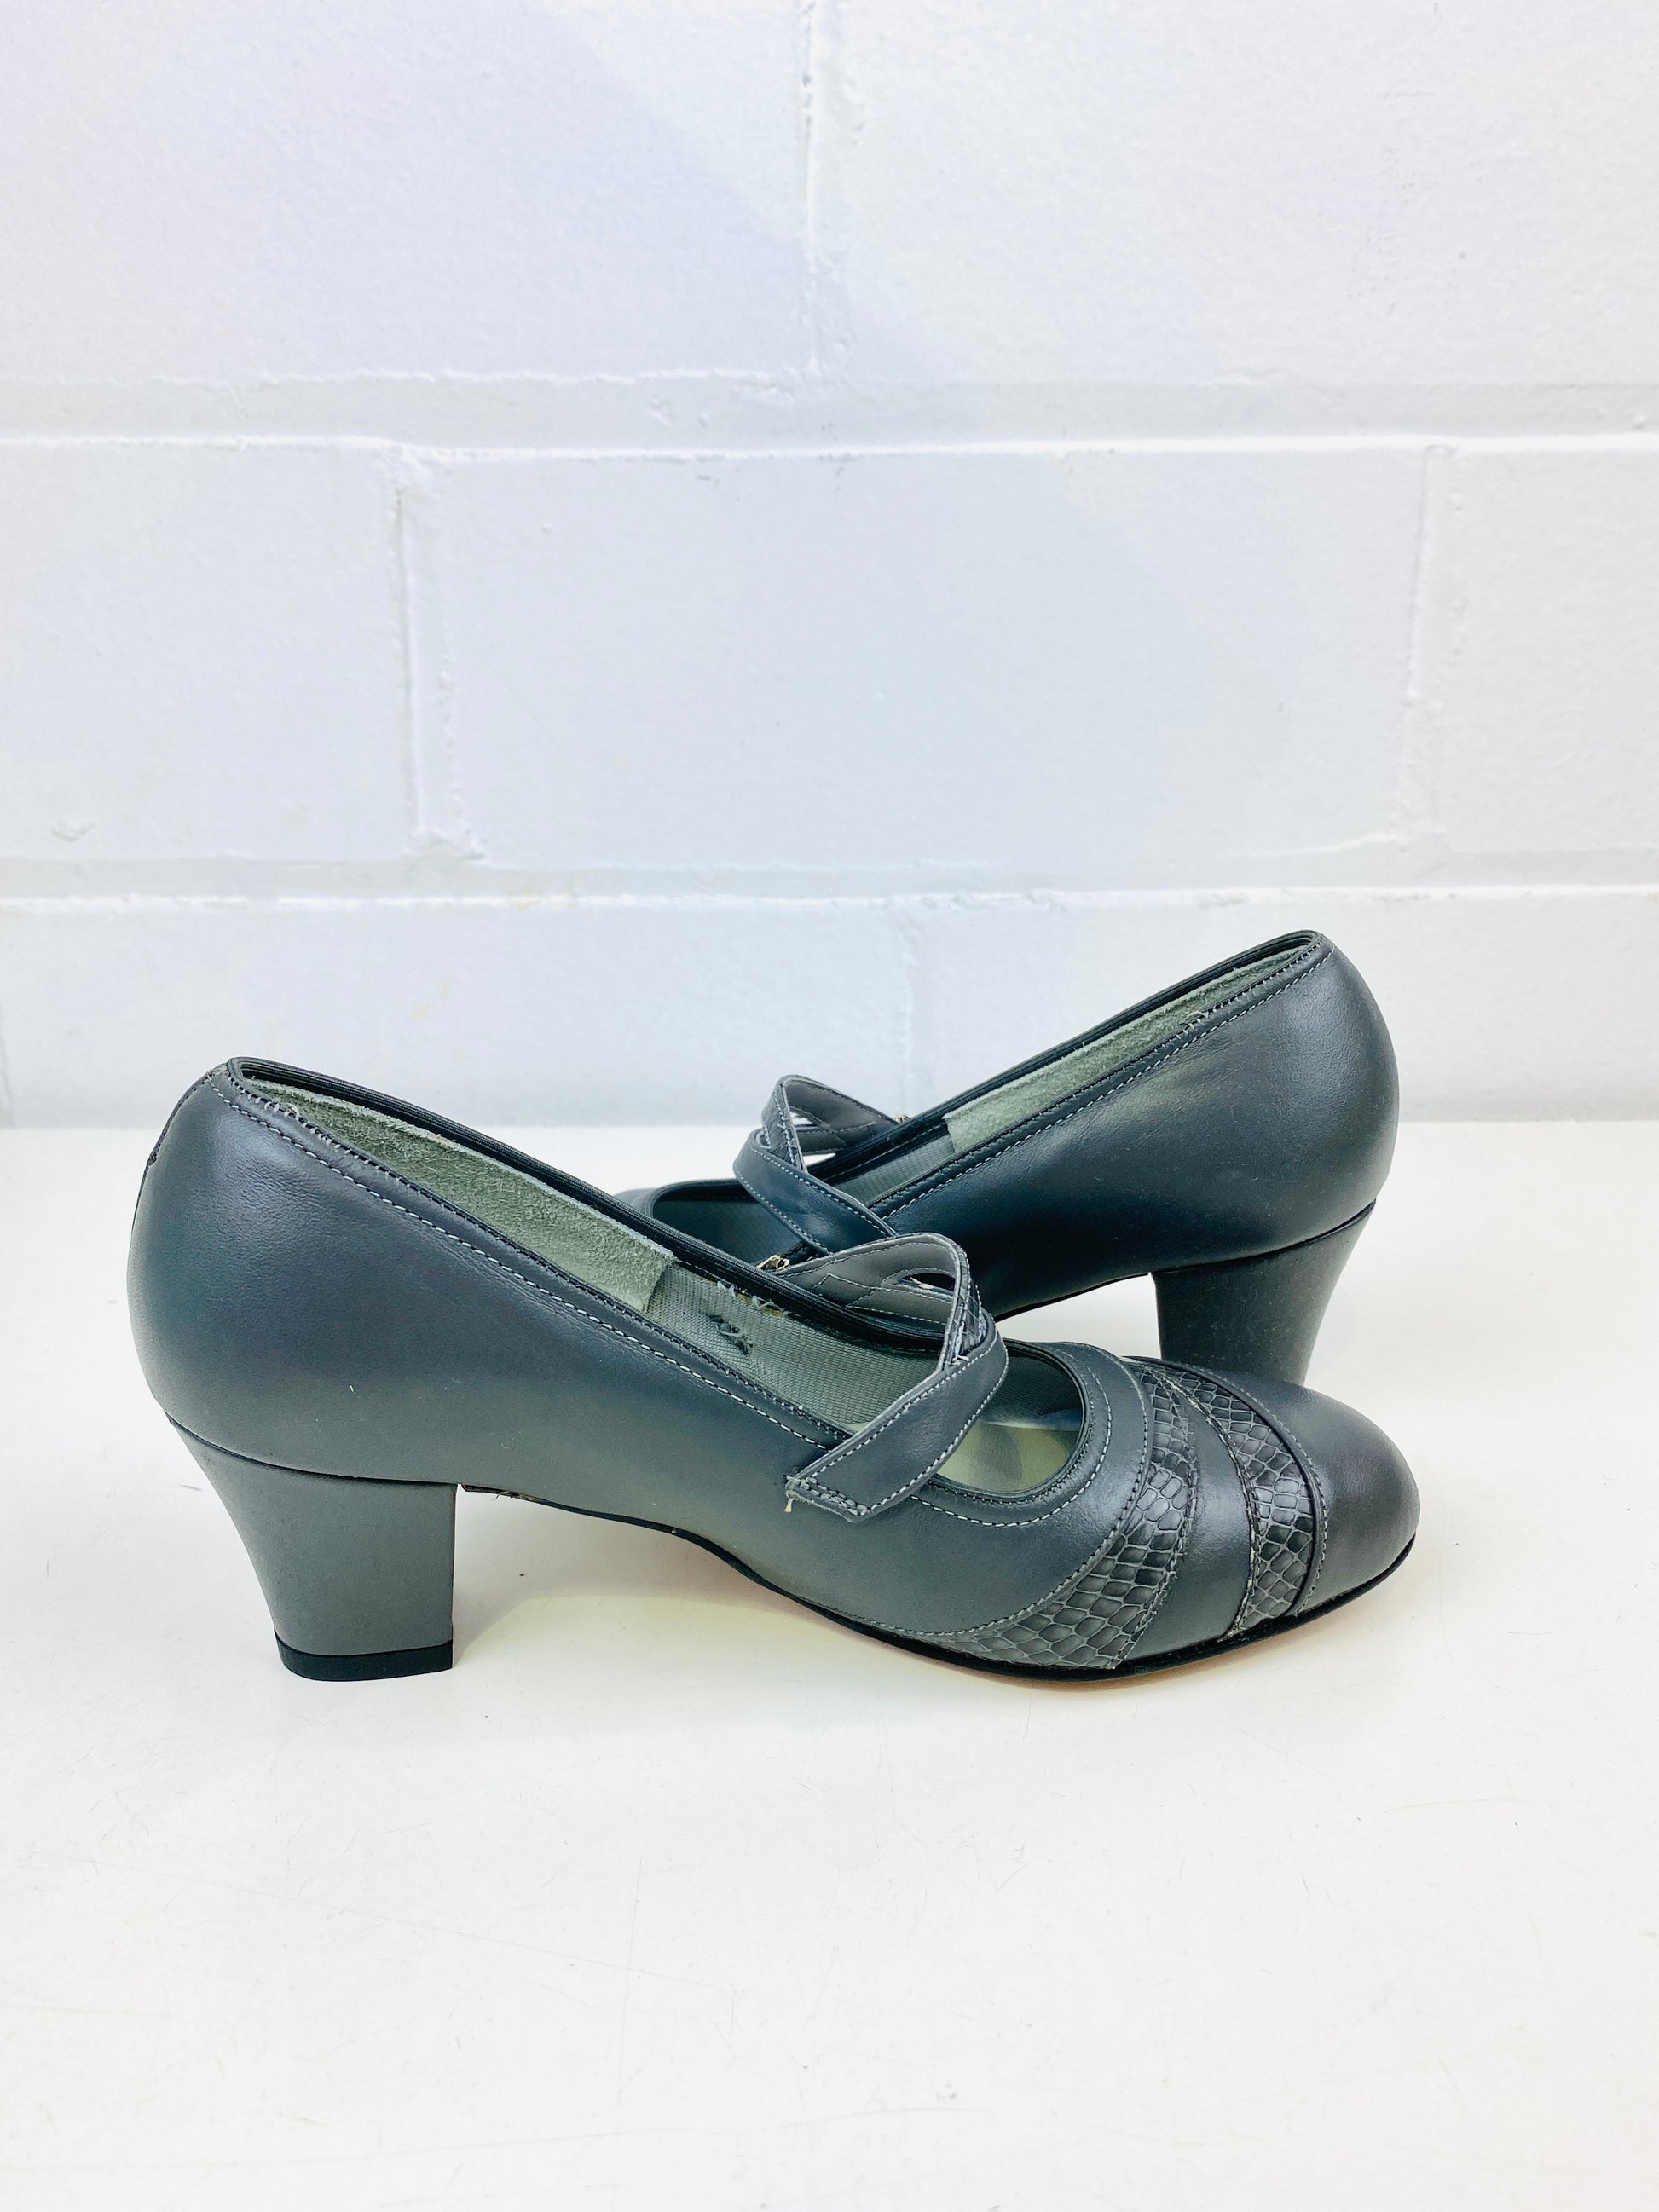 Vintage Deadstock Shoes, Women's 1980s Grey Leather Mid-Heel Pumps, NOS, 8292